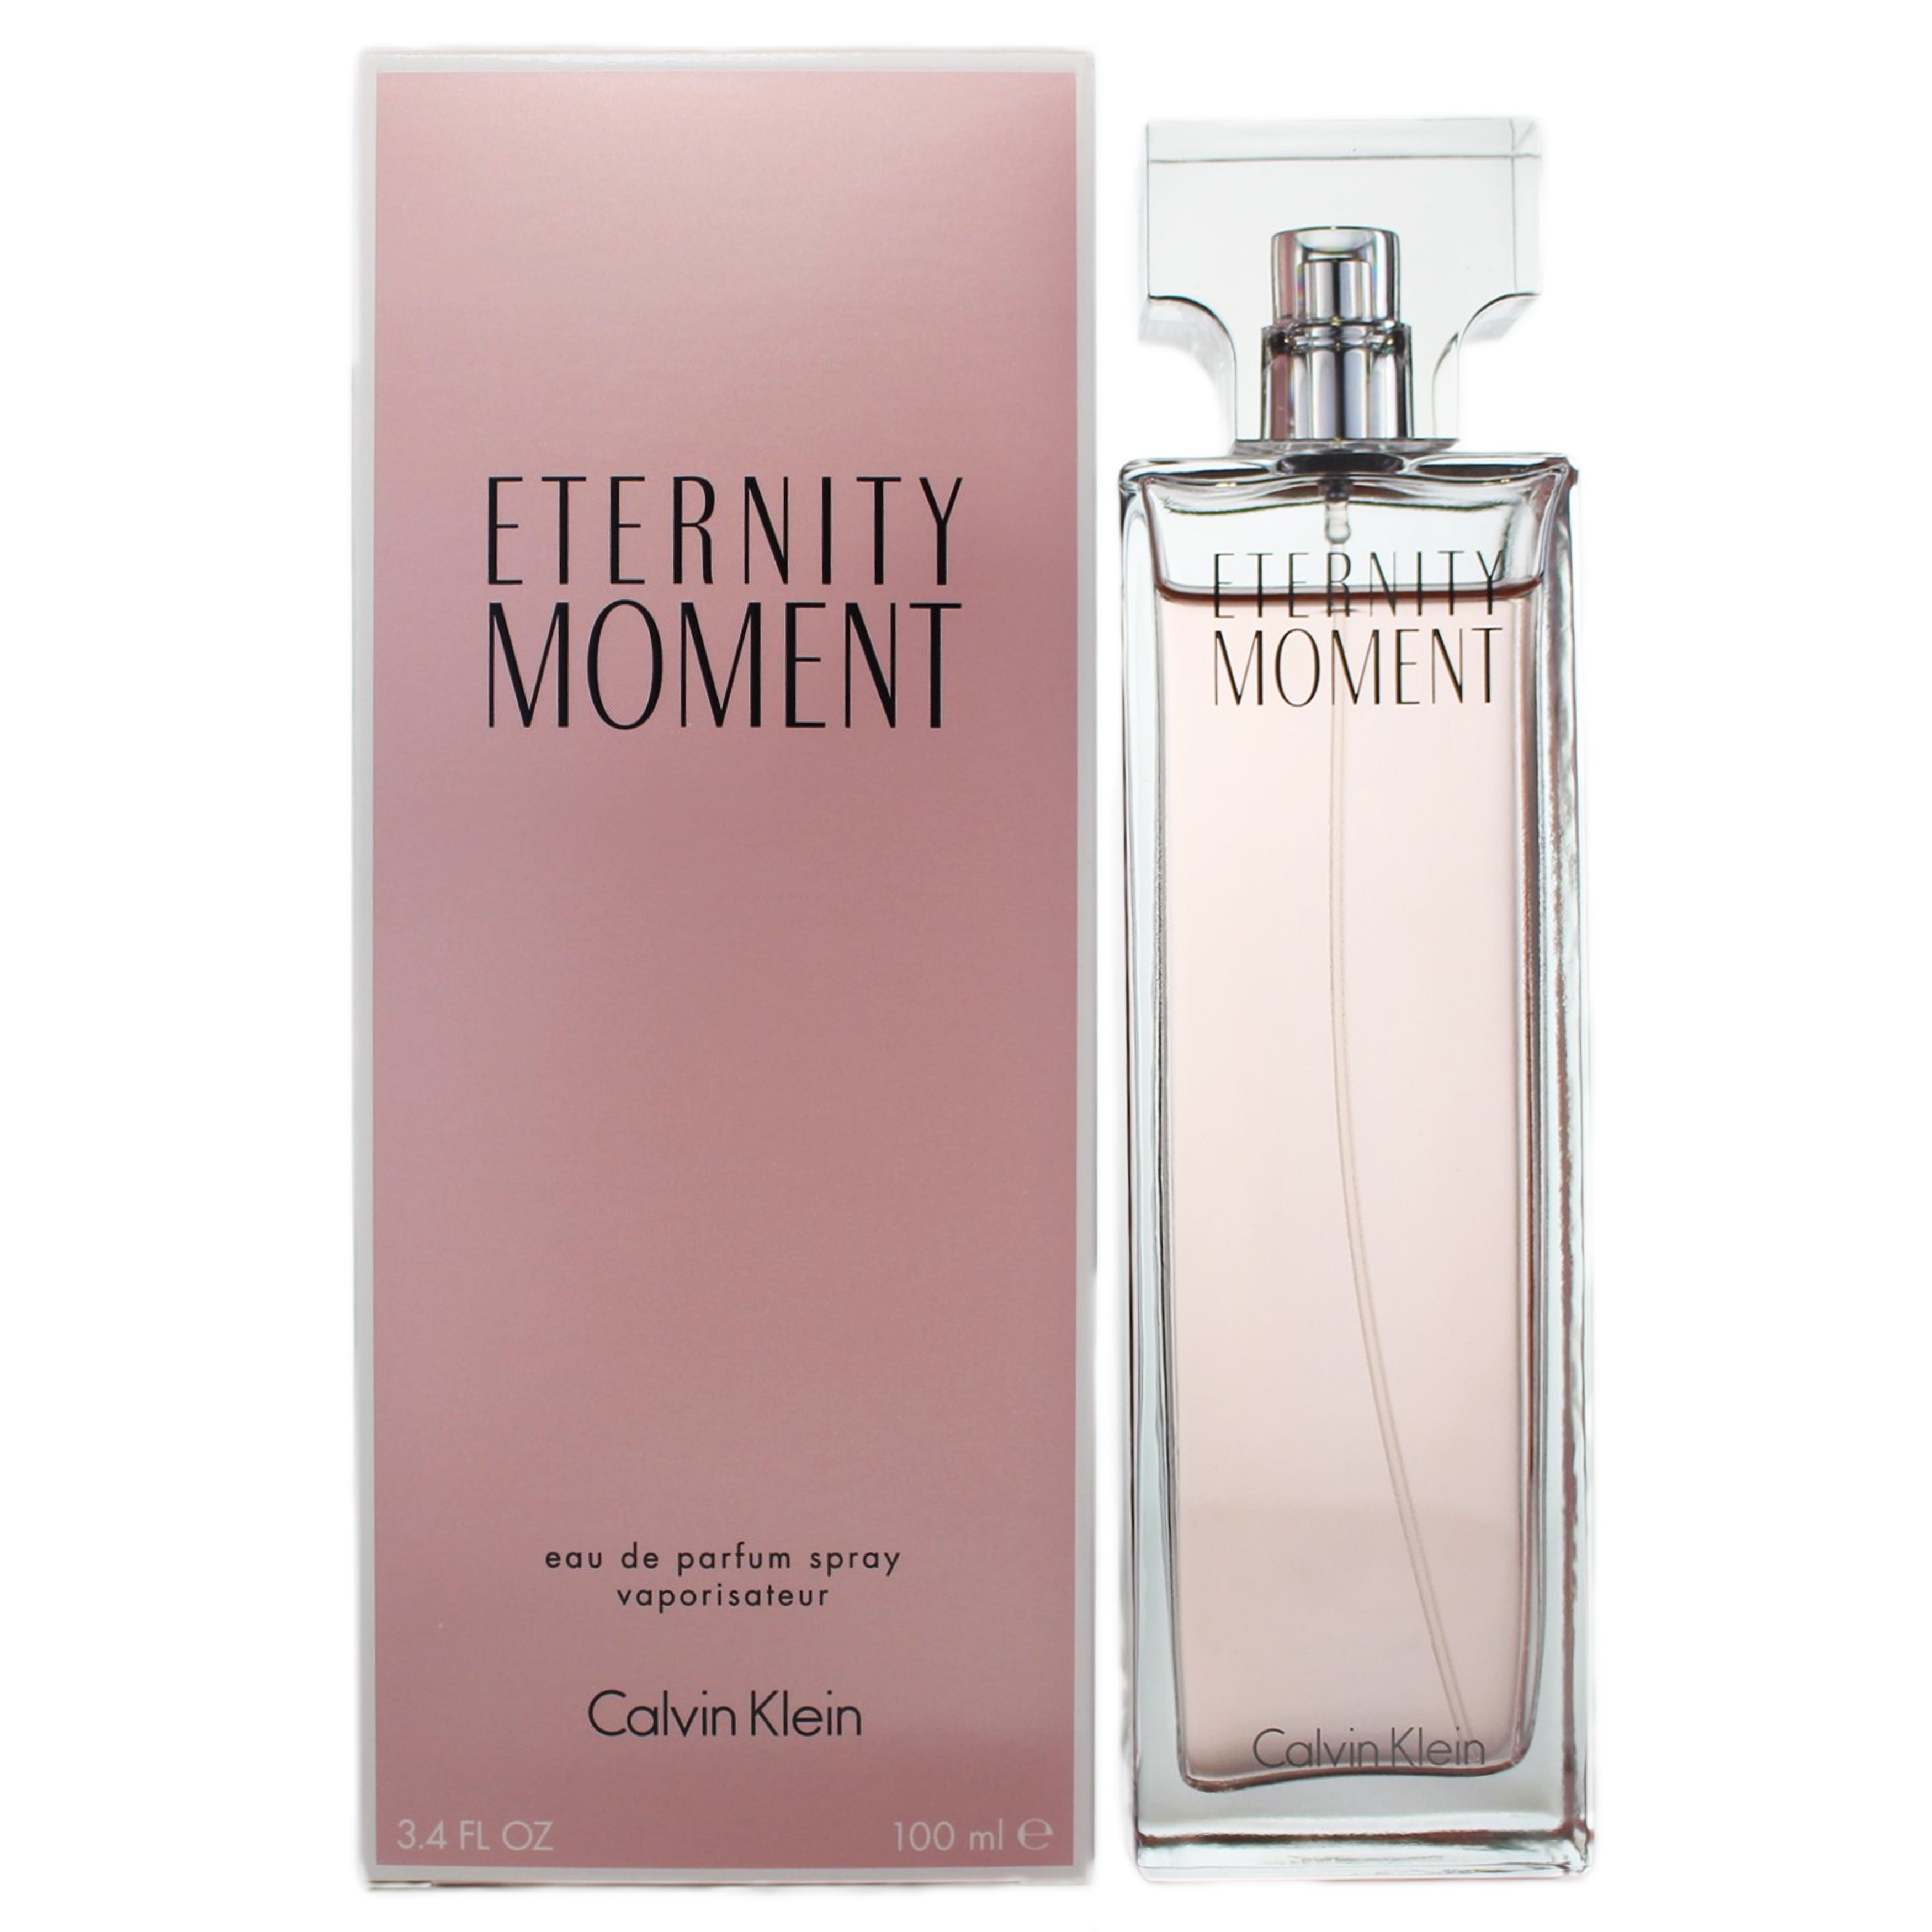 Gemeenten web gemiddelde Eternity Moment Perfume Eau De Parfum by Calvin Klein | 99Perfume.com